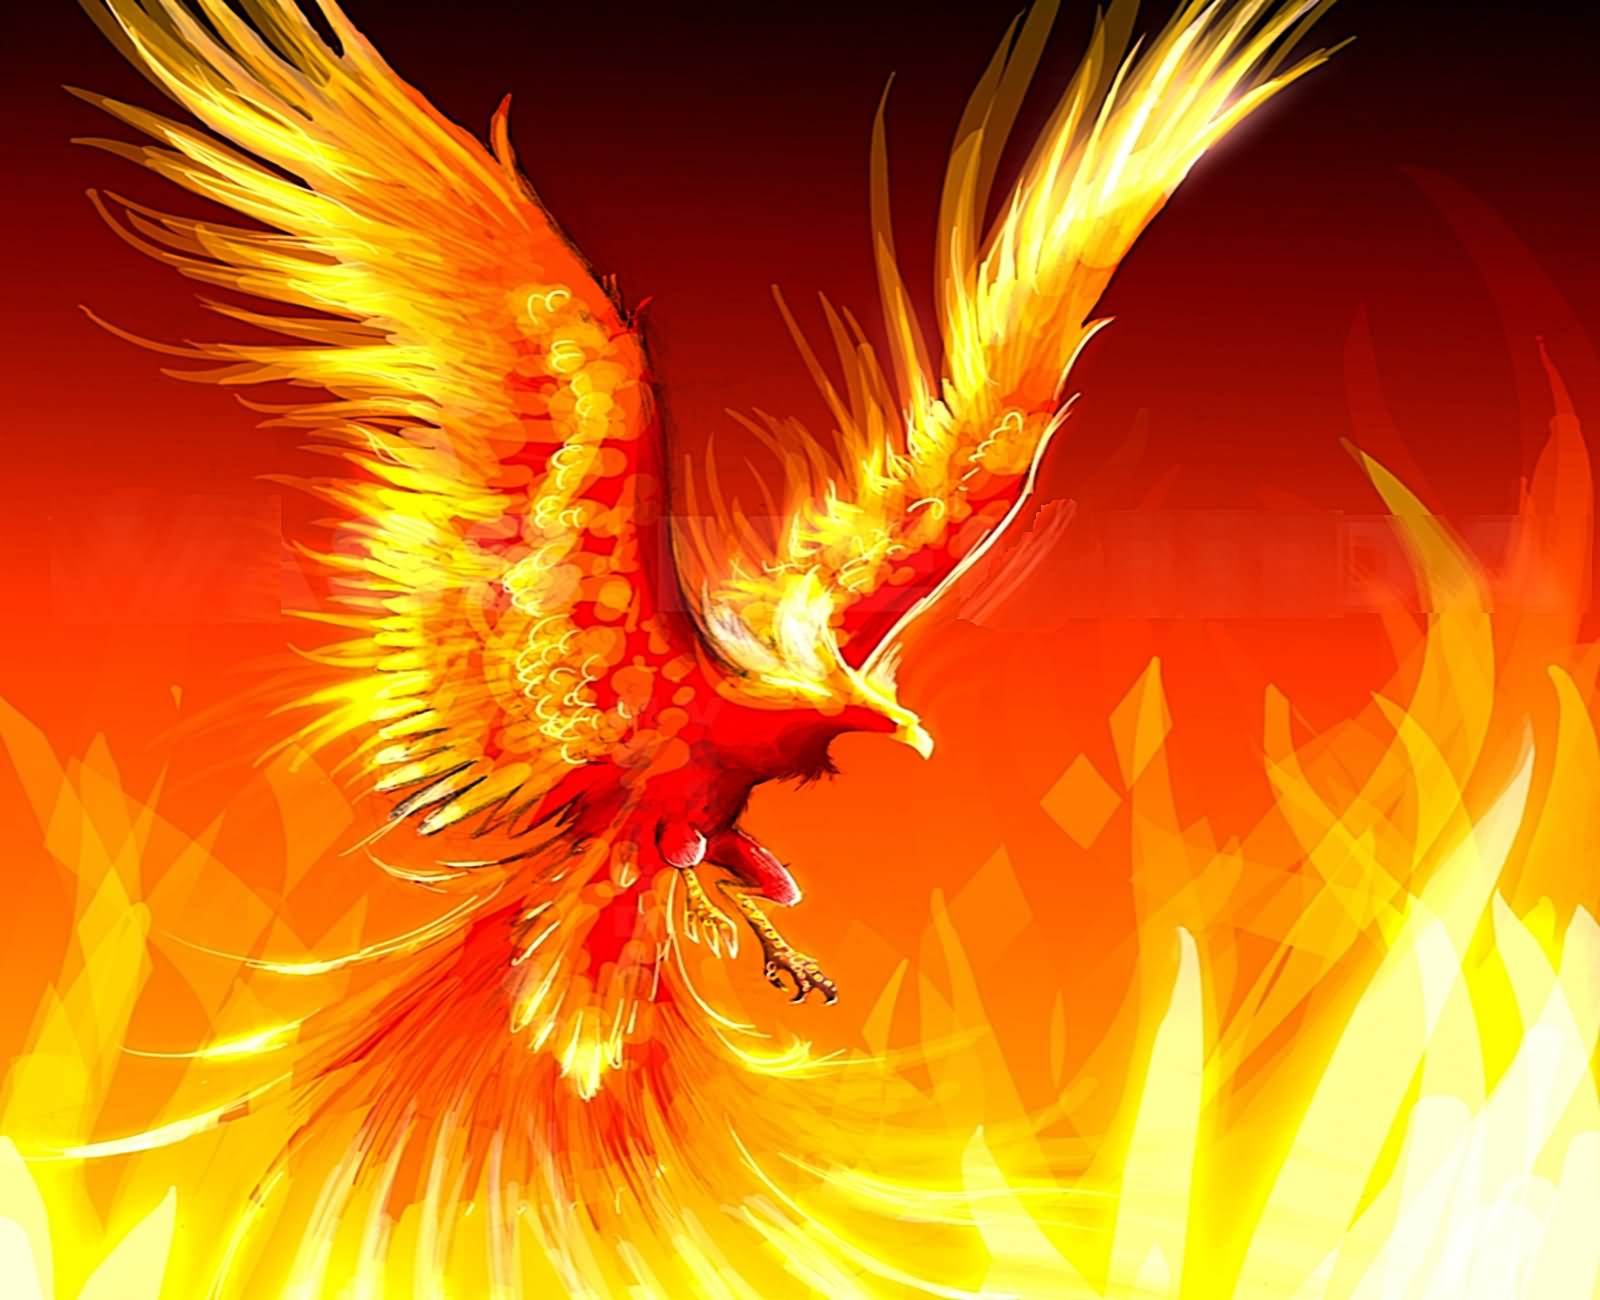 Phoenix Rising On Flames Tattoo Design